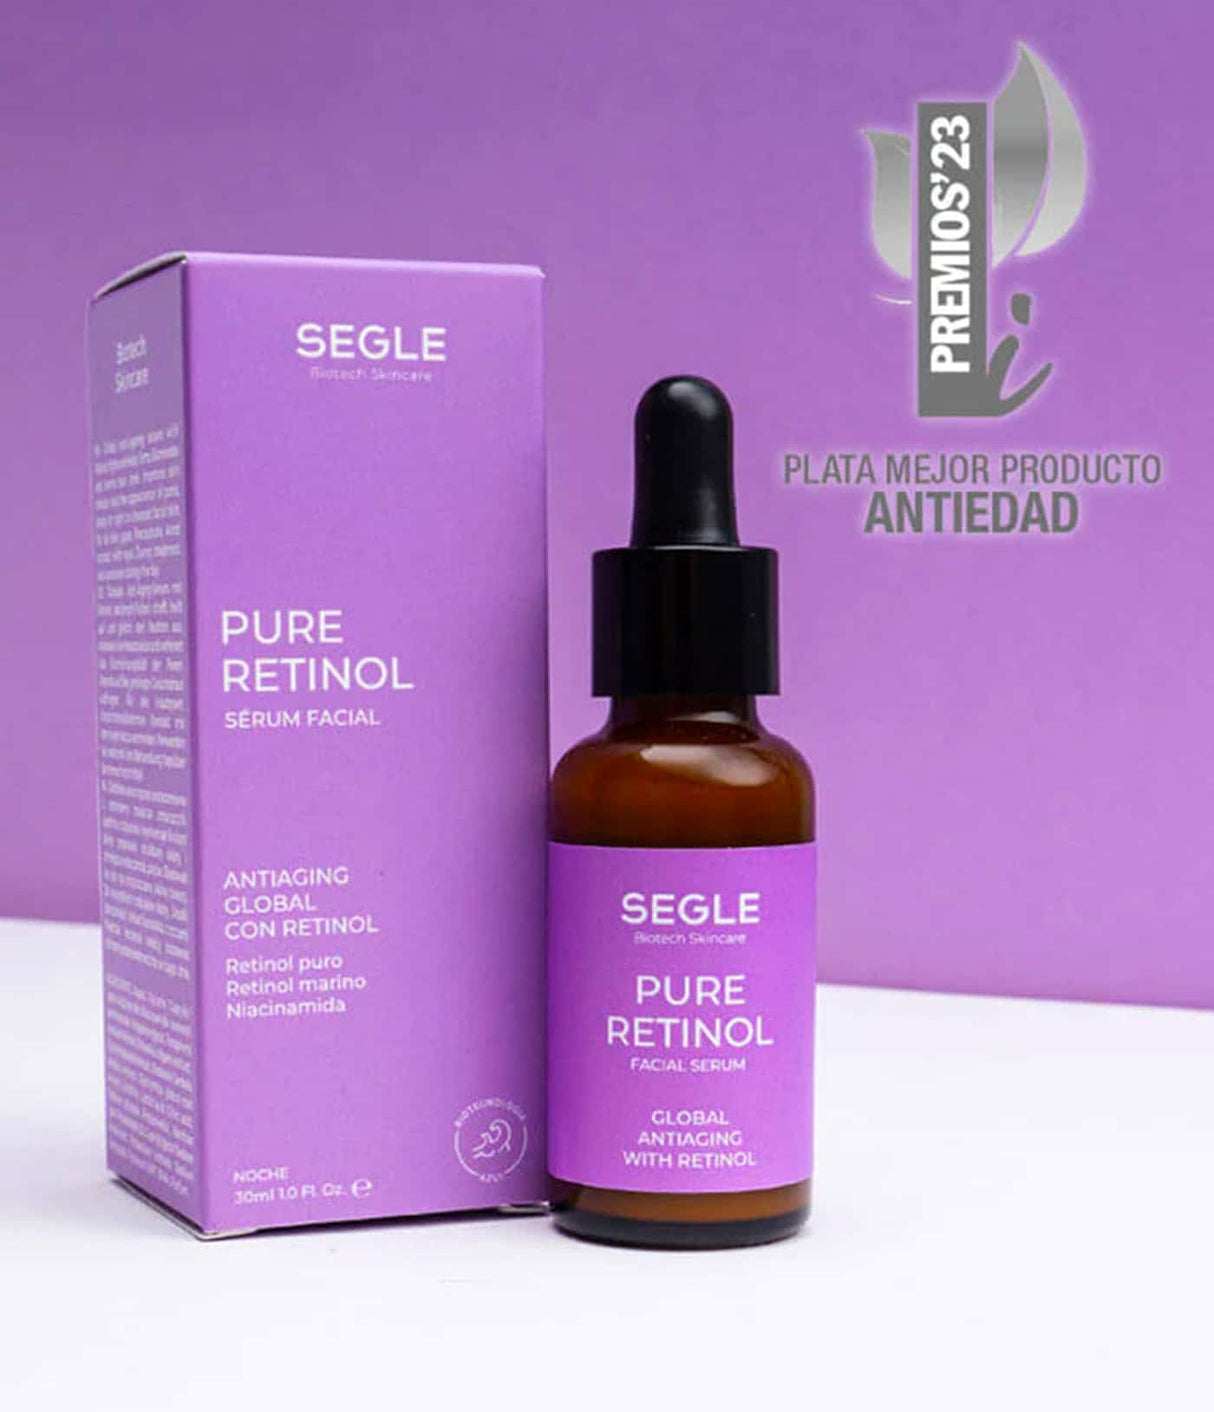 Serum Pure Retinol de Segle Clinical